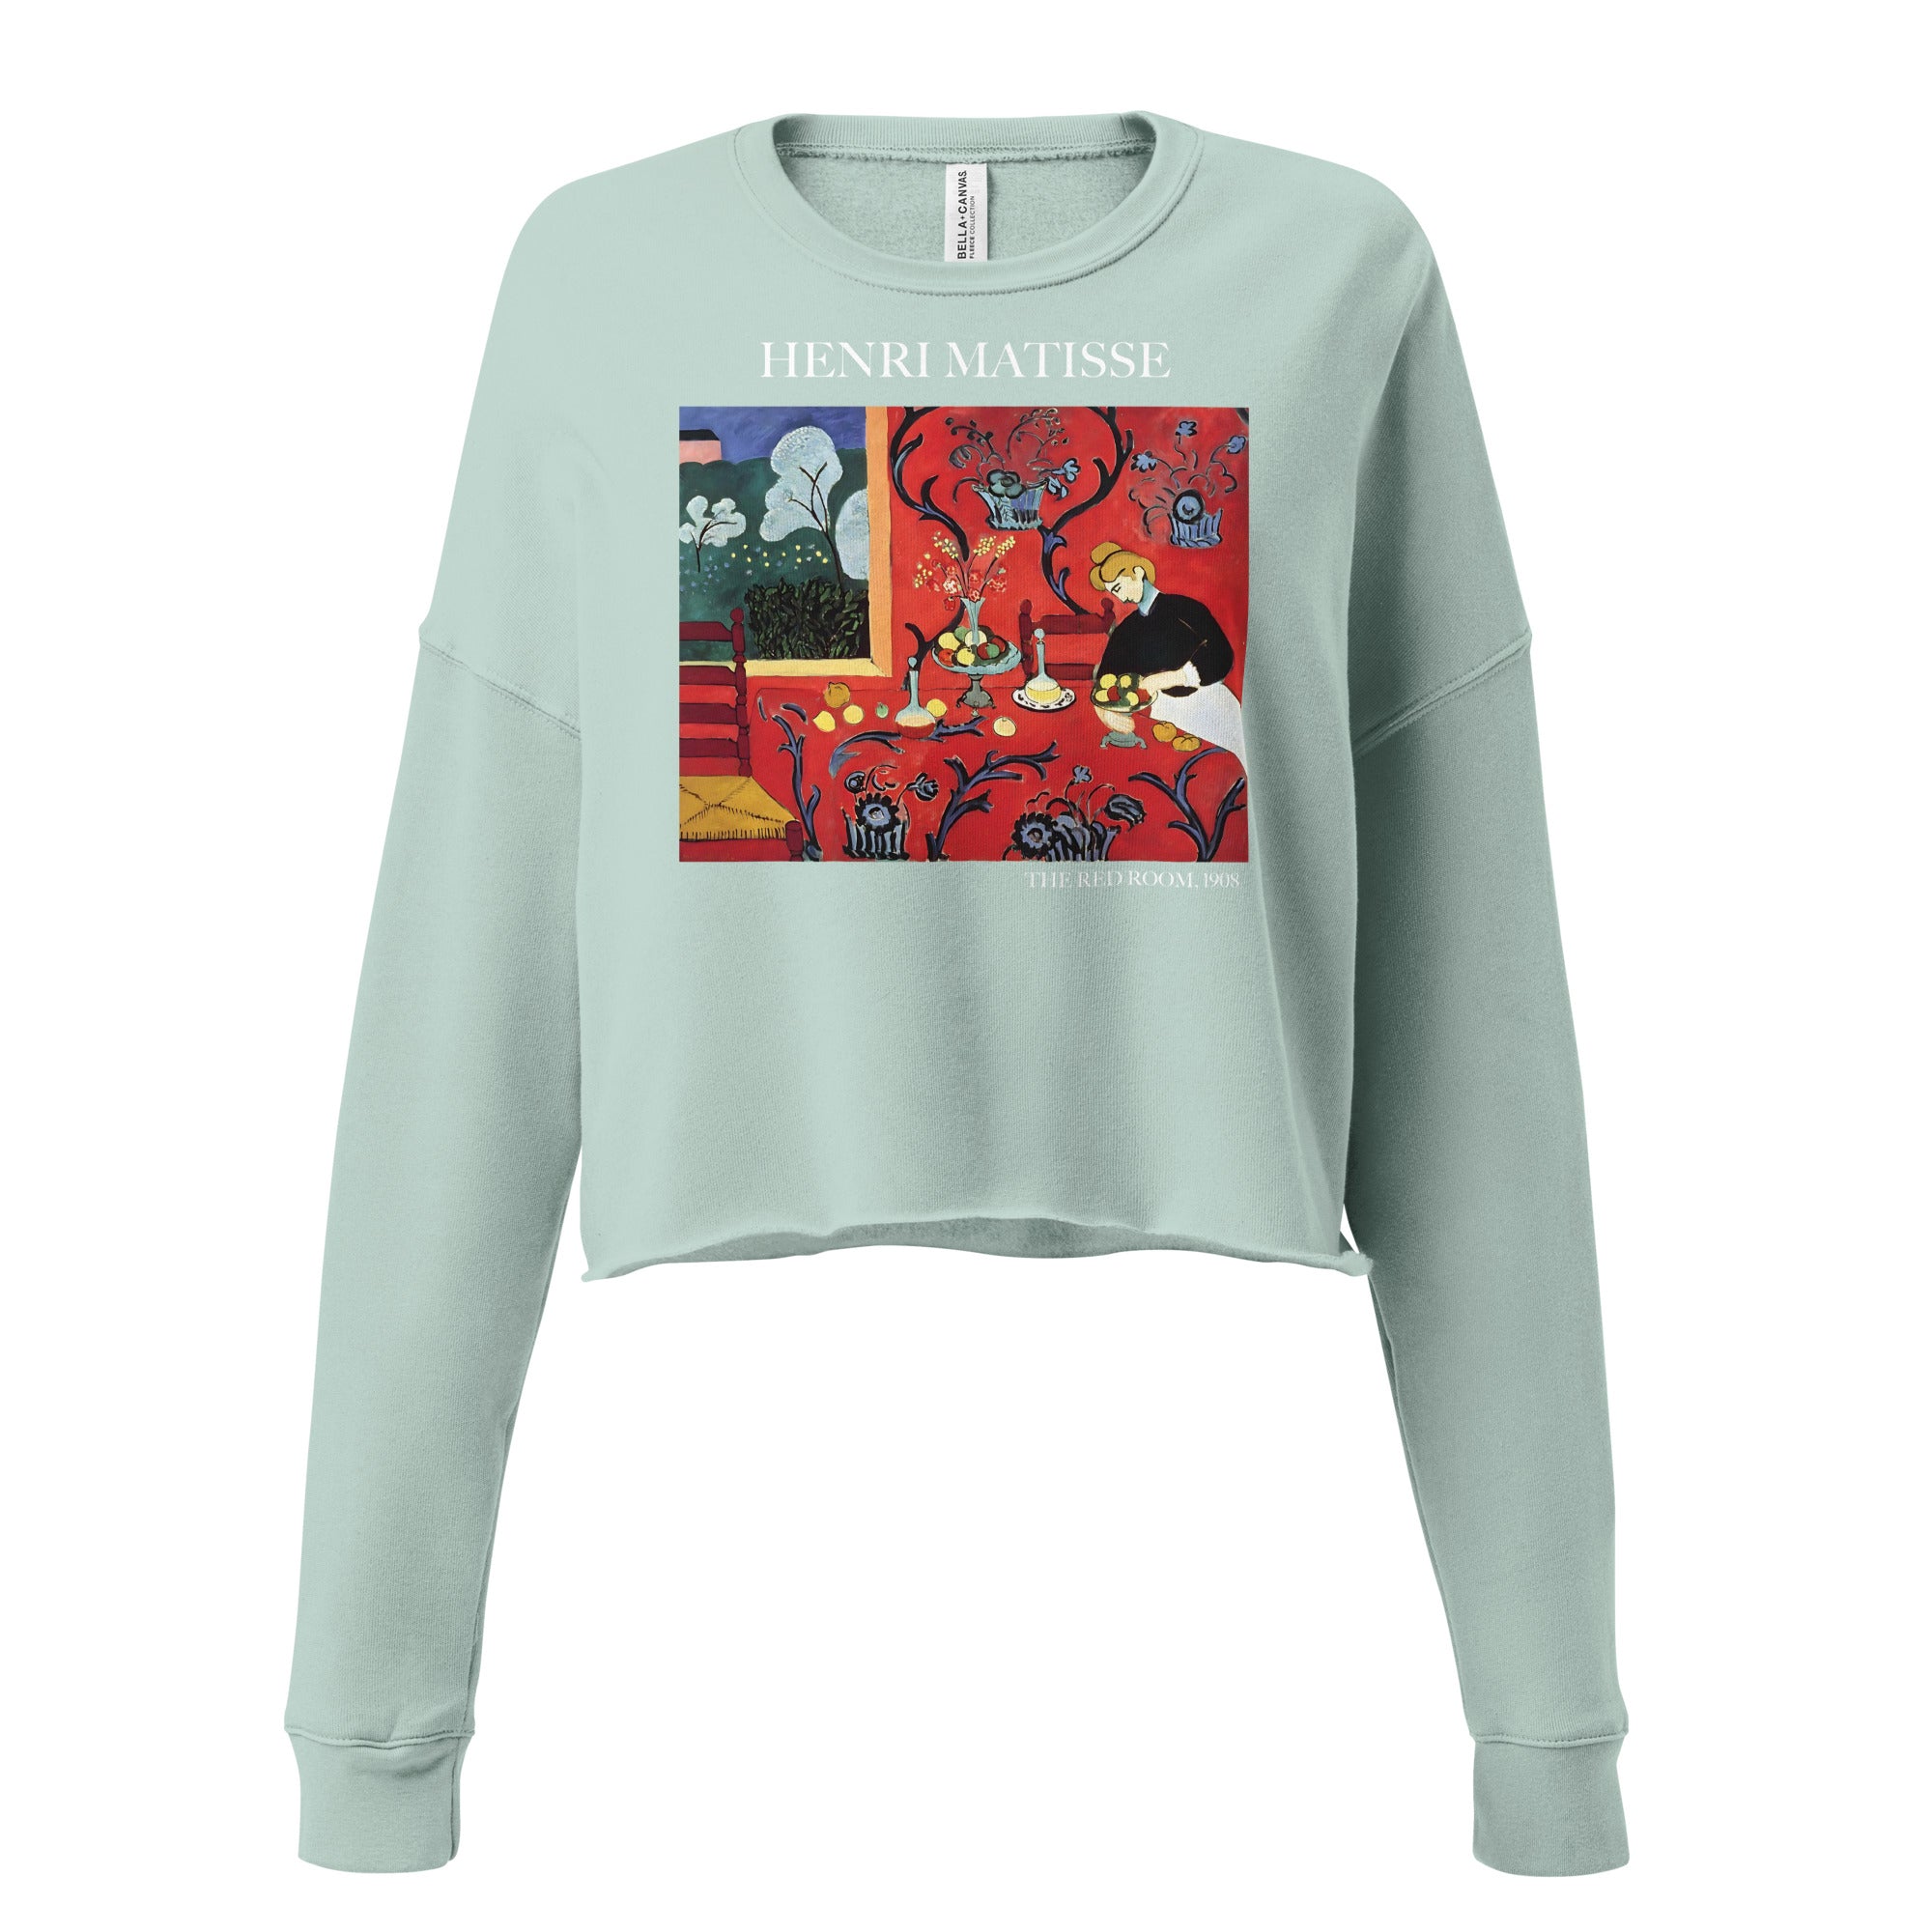 Henri Matisse 'The Red Room' Famous Painting Cropped Sweatshirt | Premium Art Cropped Sweatshirt